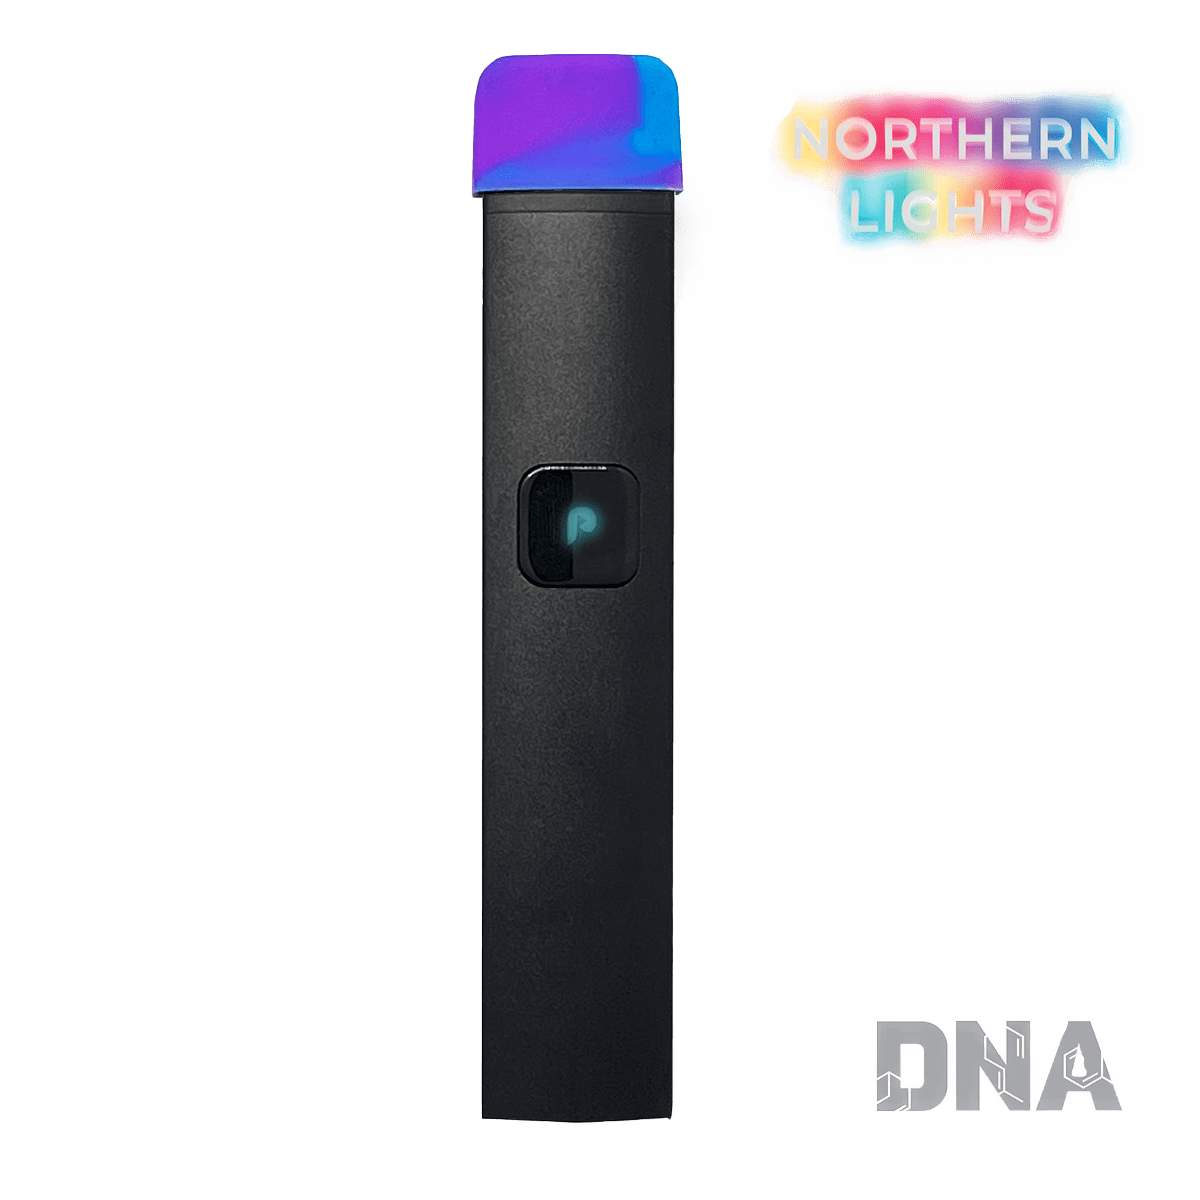 PLUGplay DNA Disposable Cartridge – Northern Lights 1g –